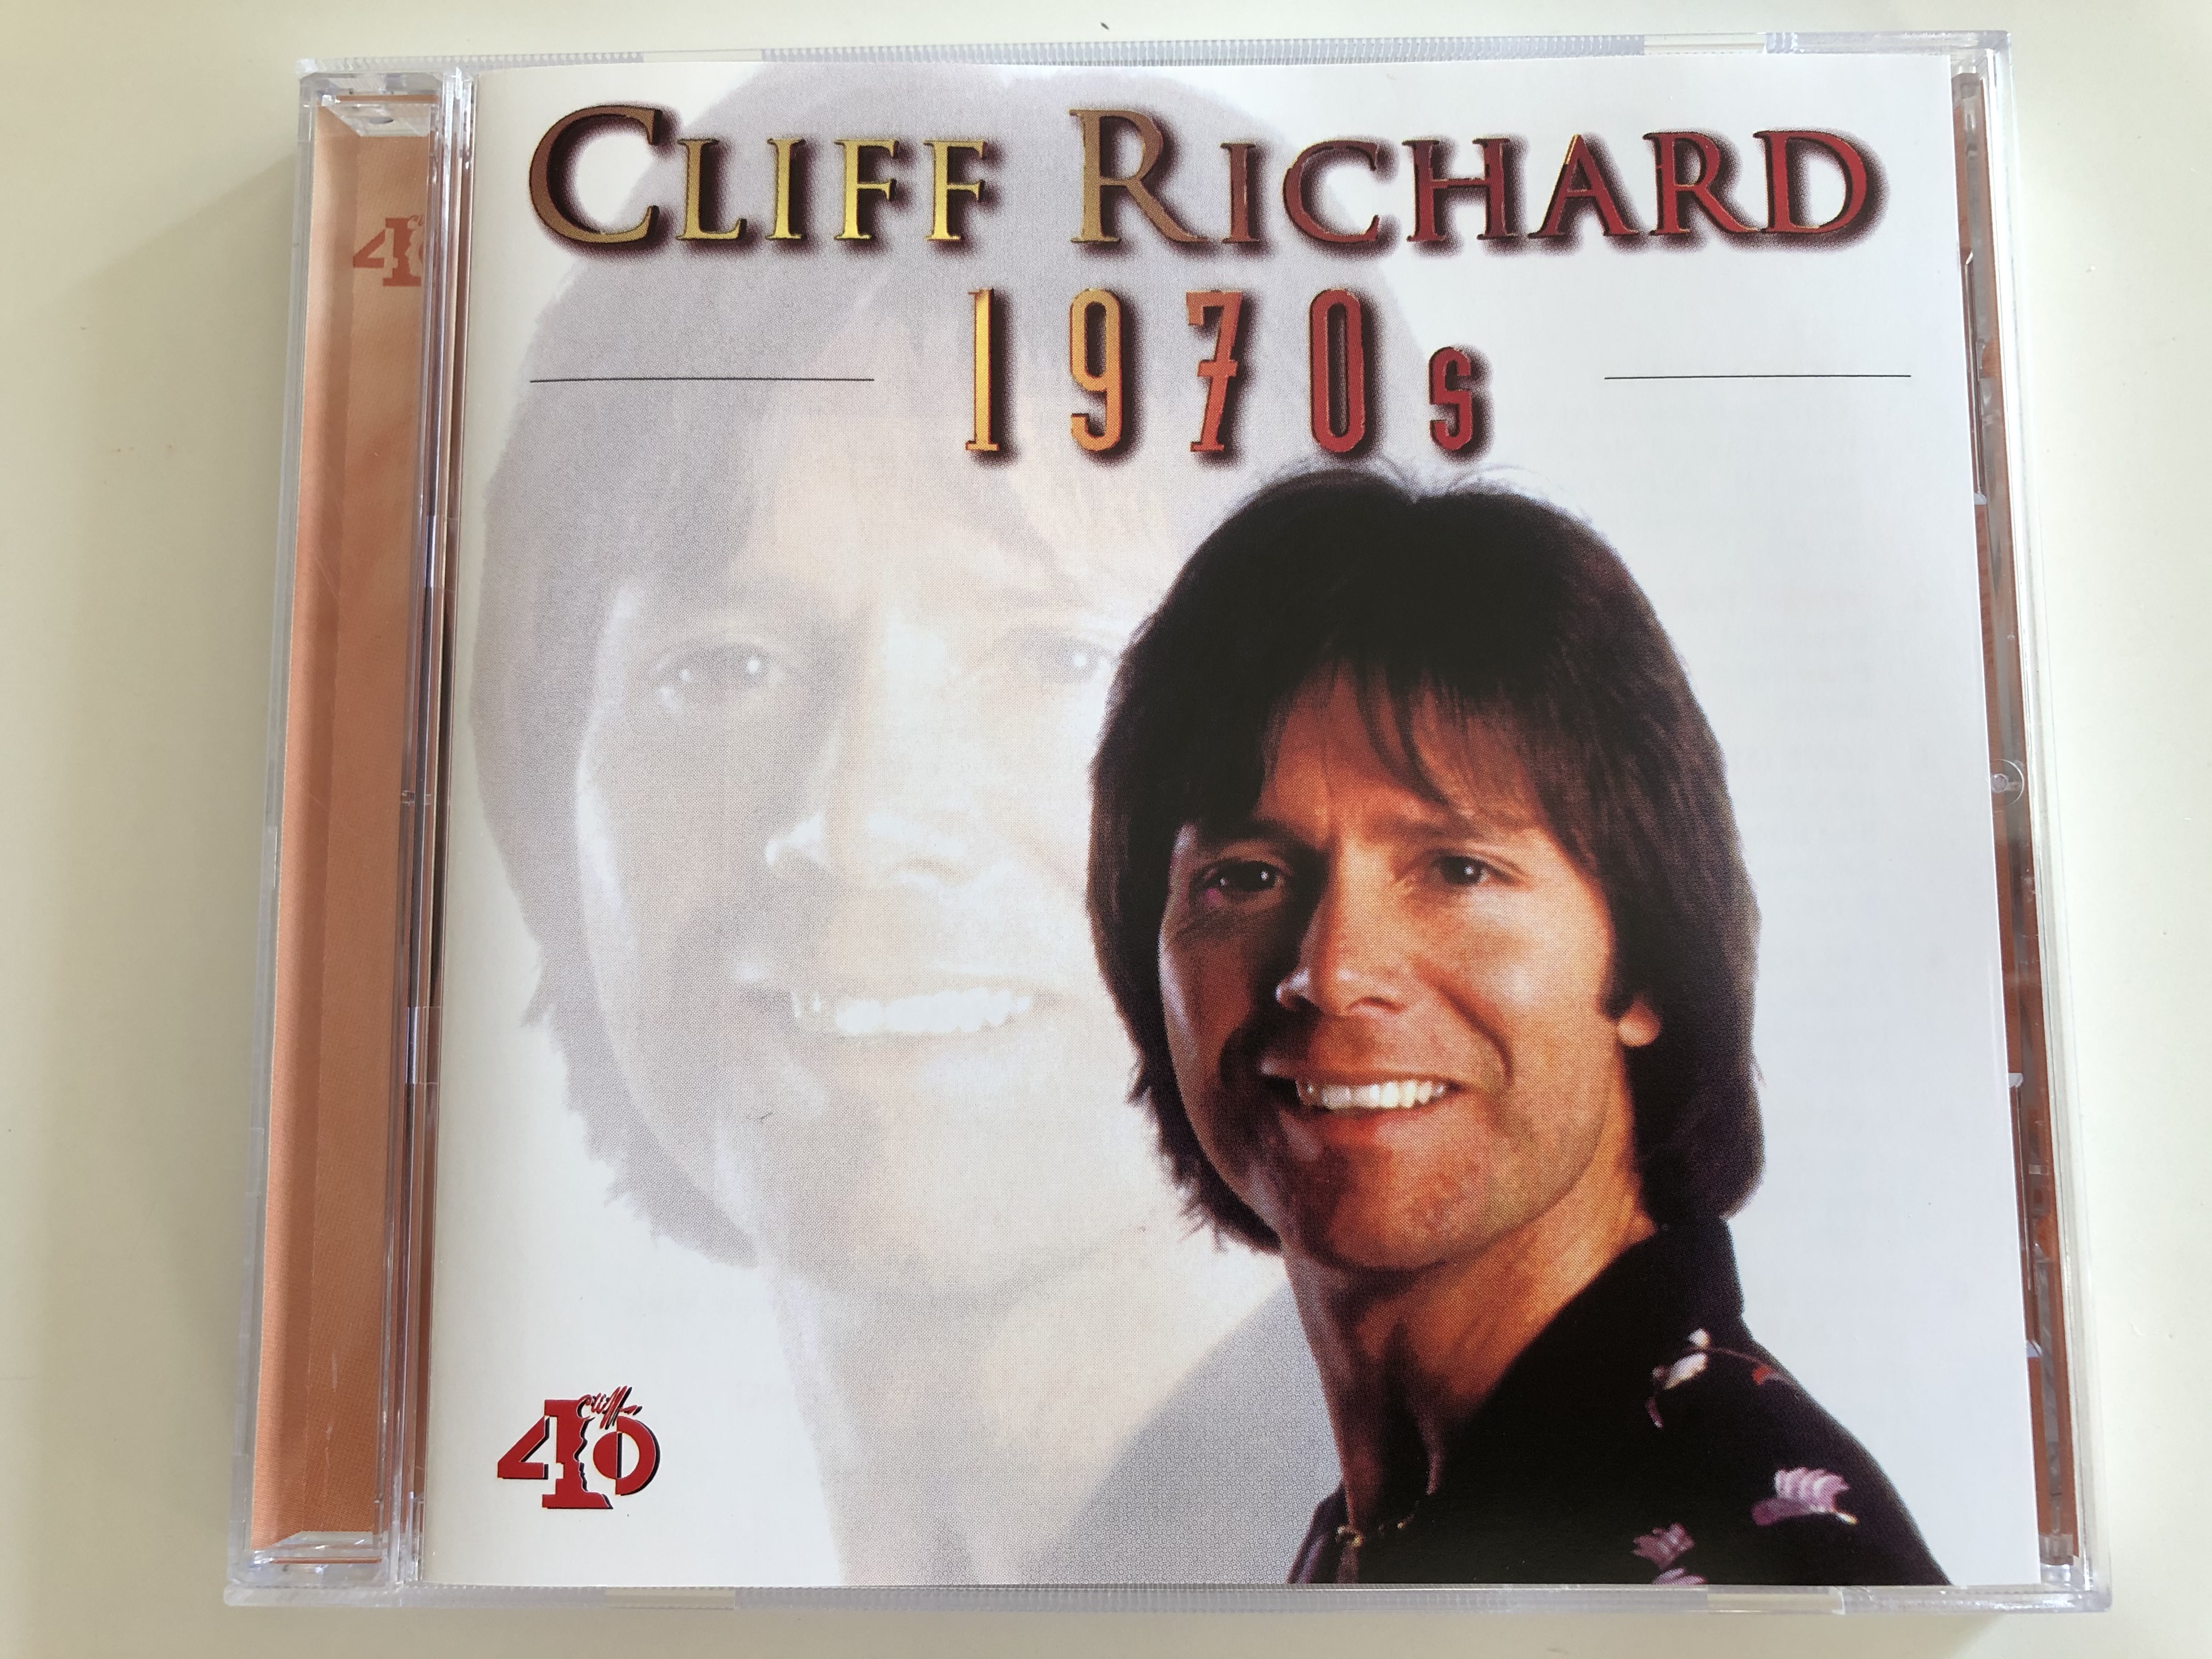 cliff-richard-1970s-emi-audio-cd-1998-724349713420-1-.jpg